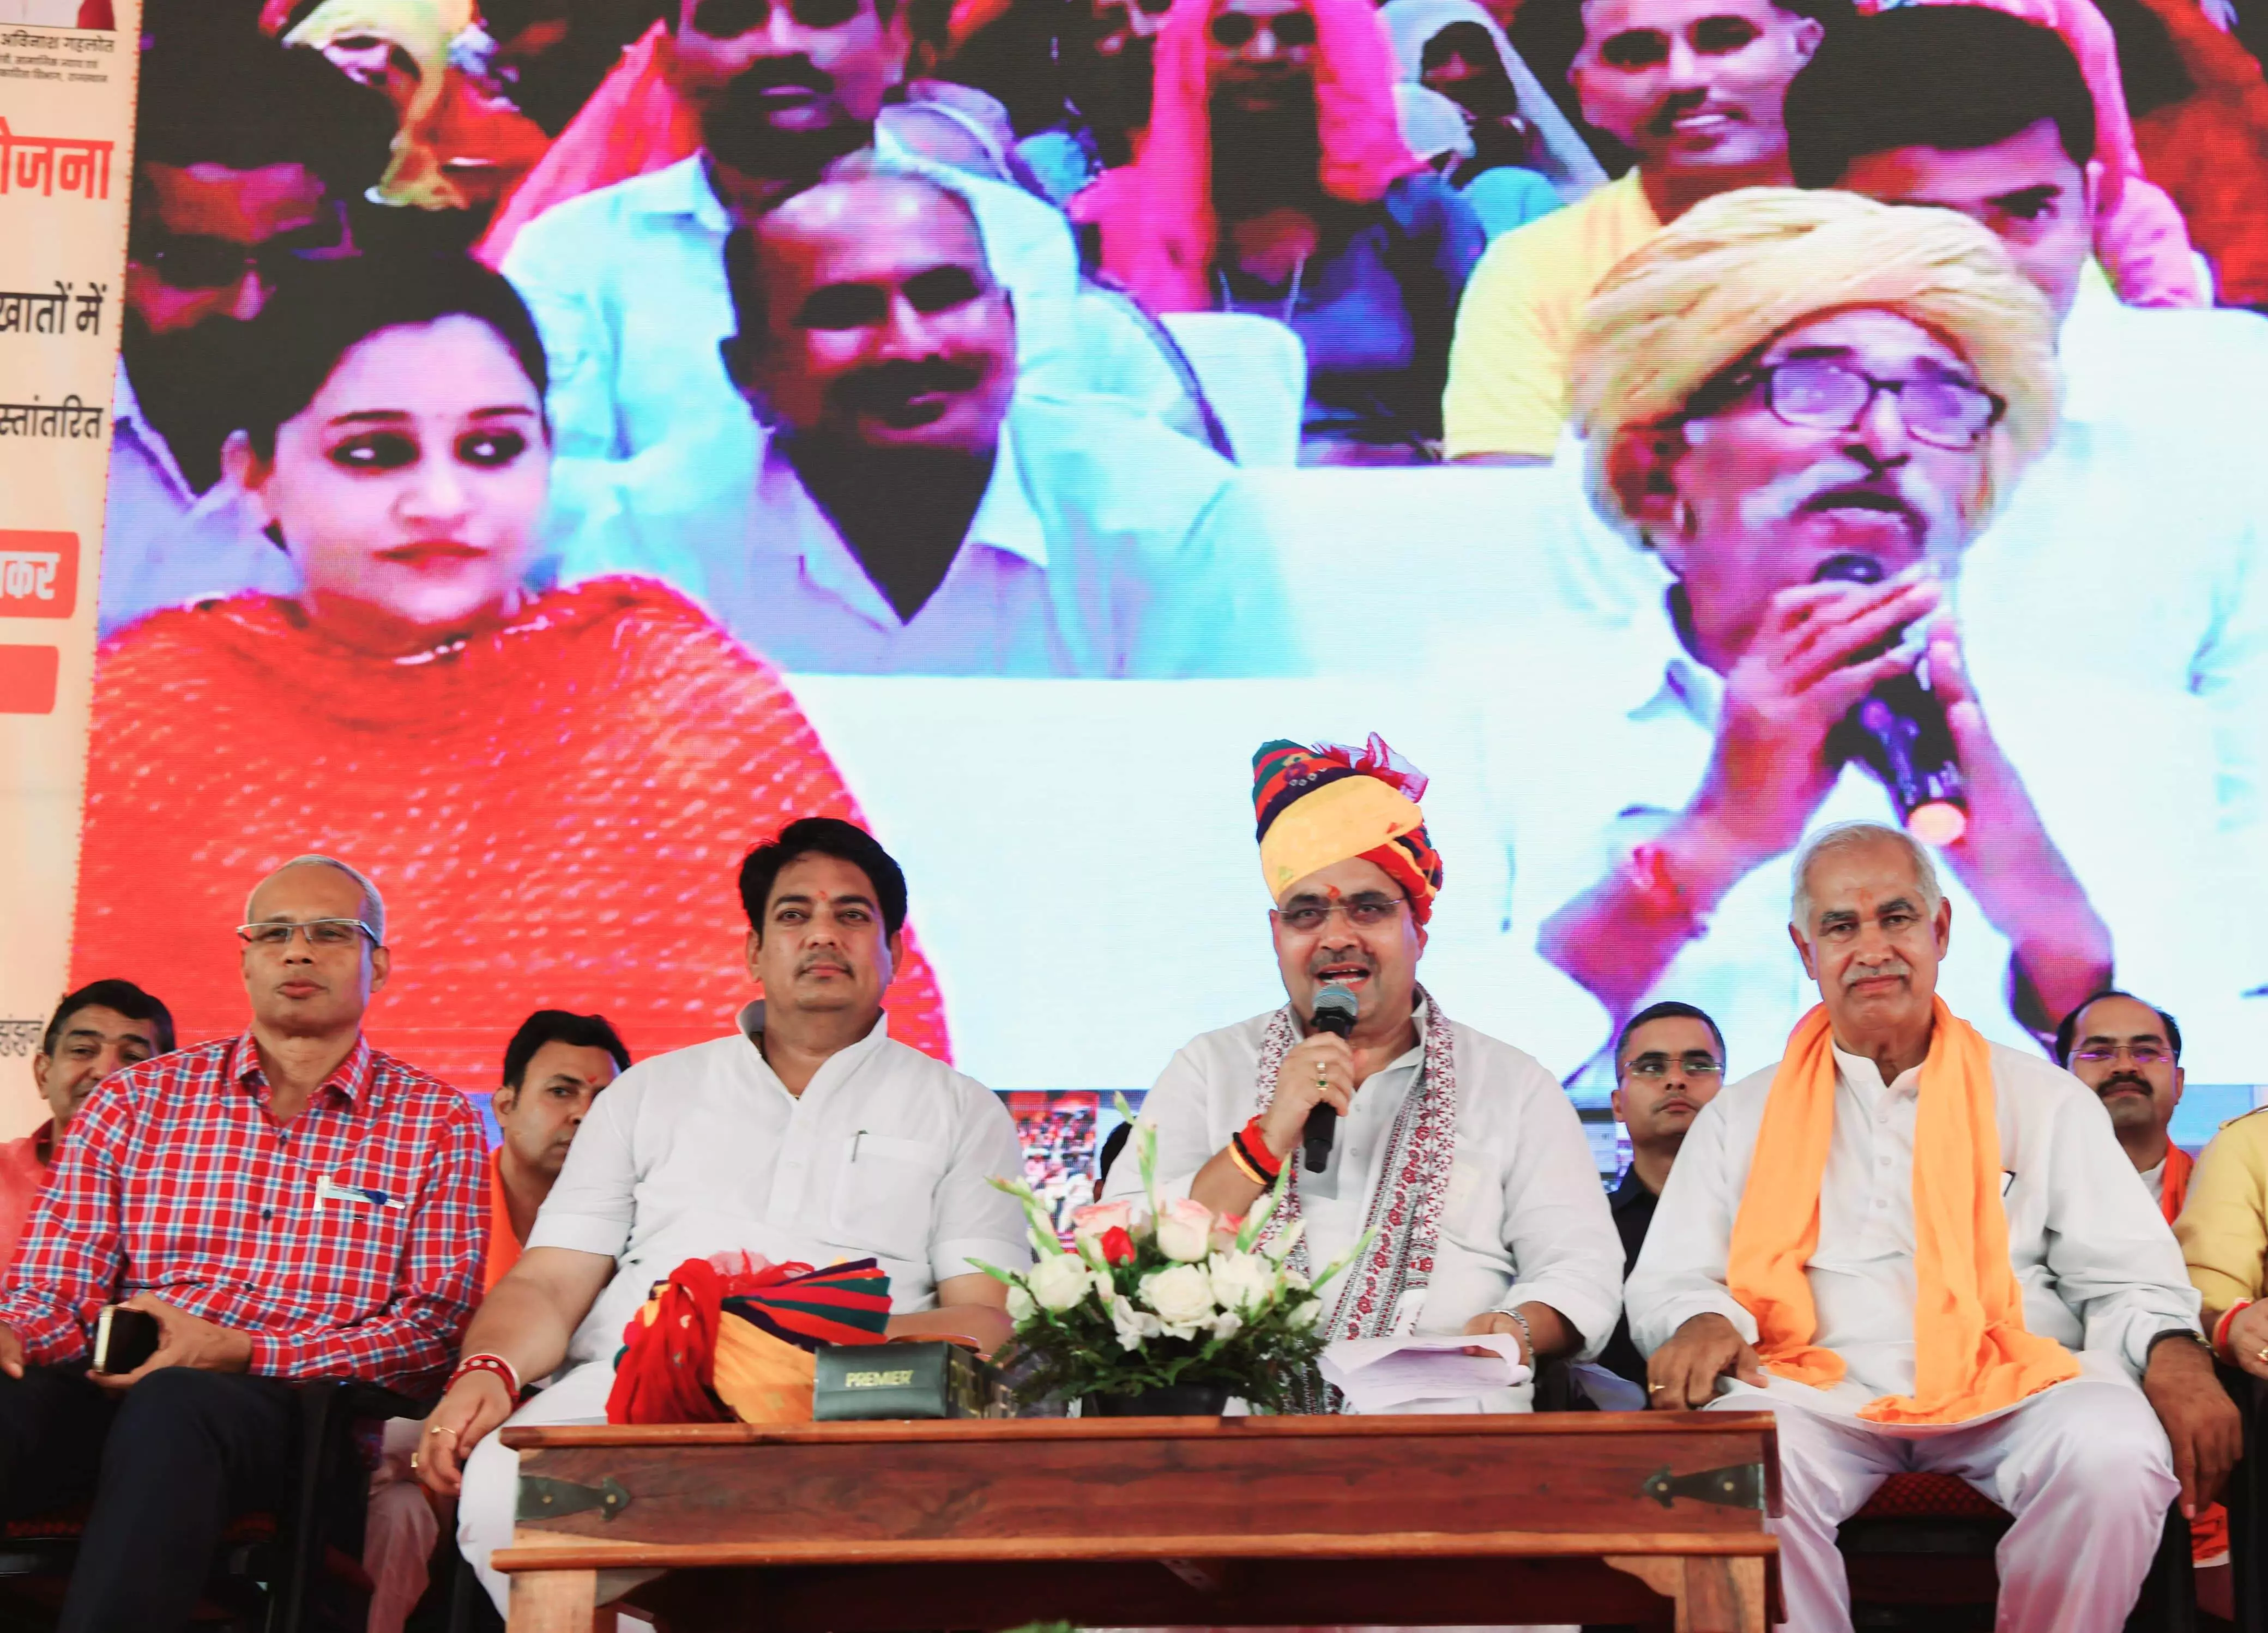 Jaipur : मुख्यमंत्री भजनलाल शर्मा - राजस्थान प्रथम बने, यही राज्य सरकार का संकल्प